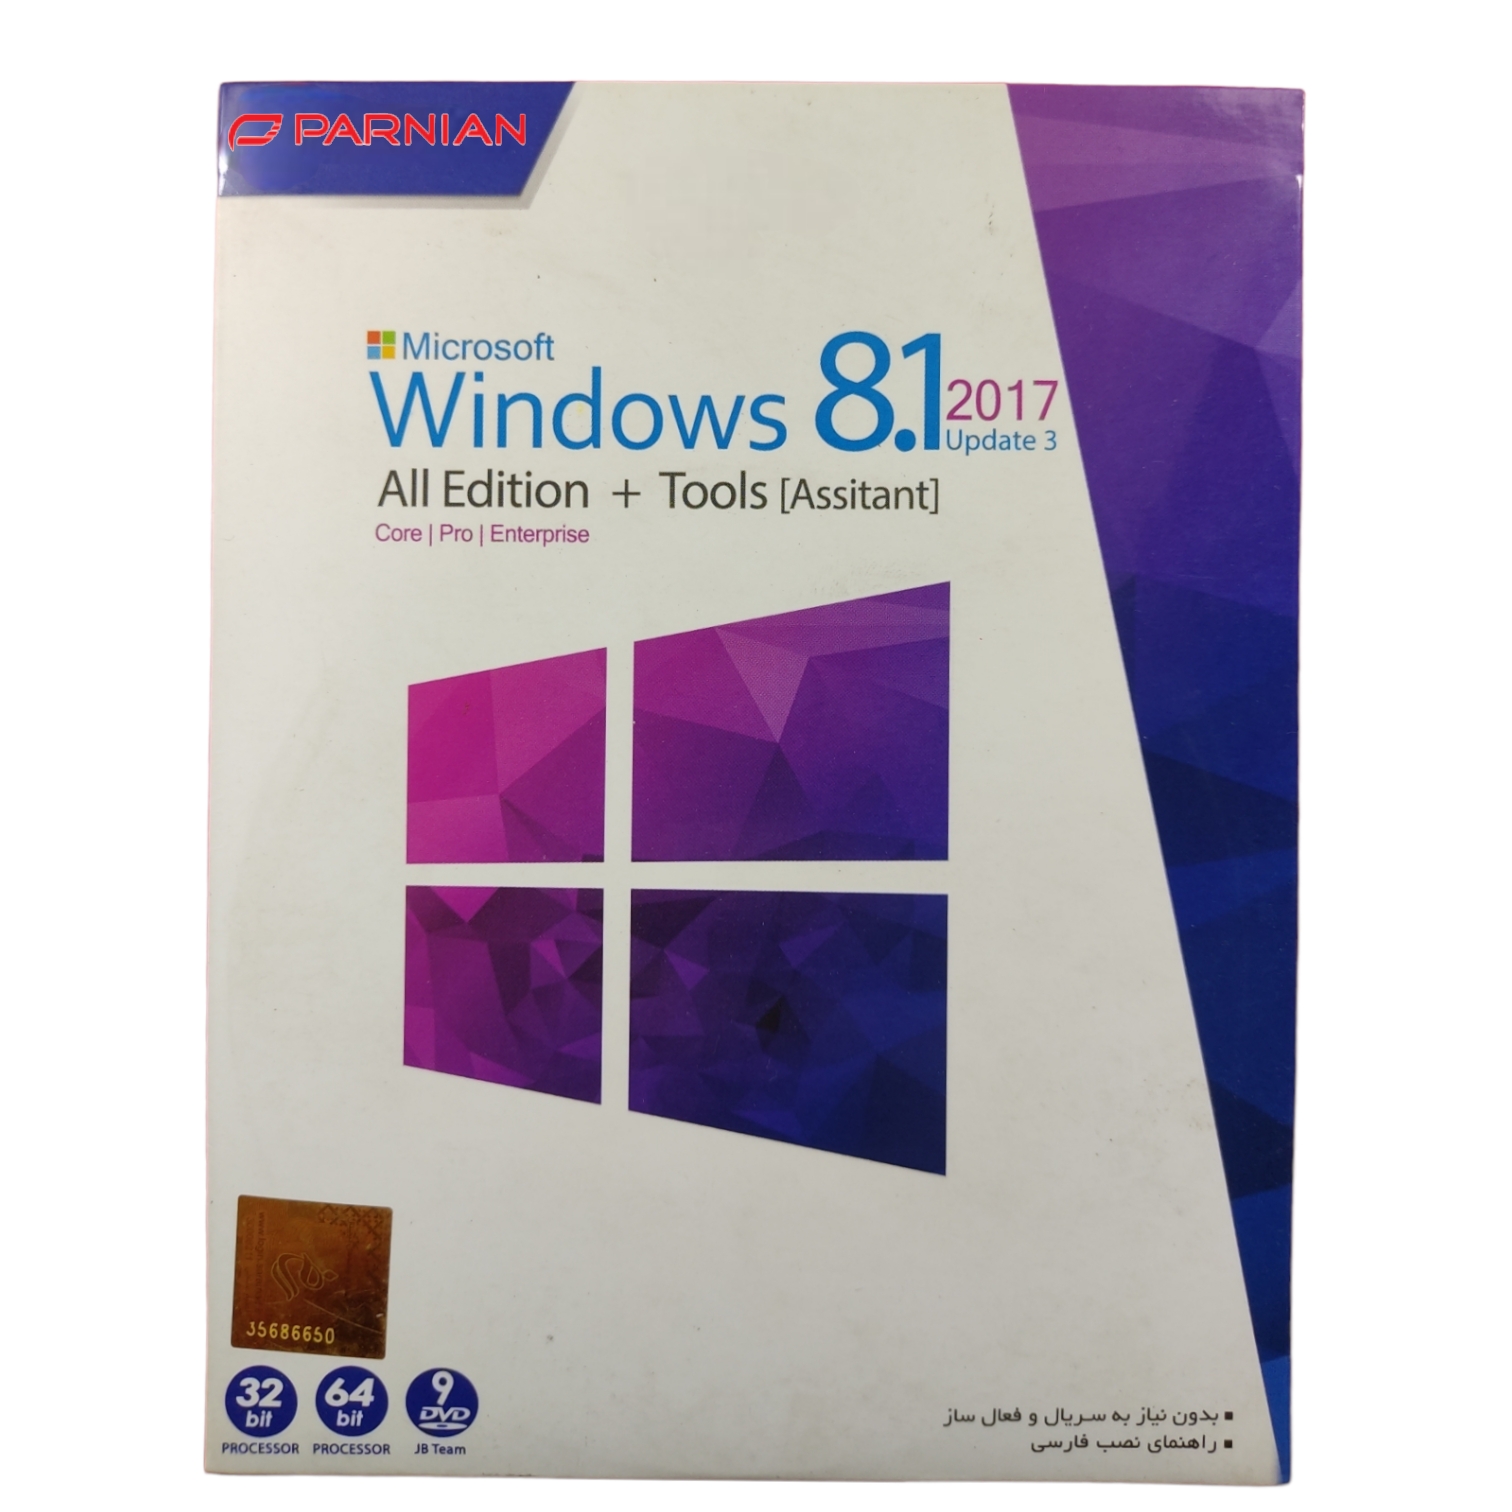 سیستم عامل windows 8.1 2017  نشر پرنیان